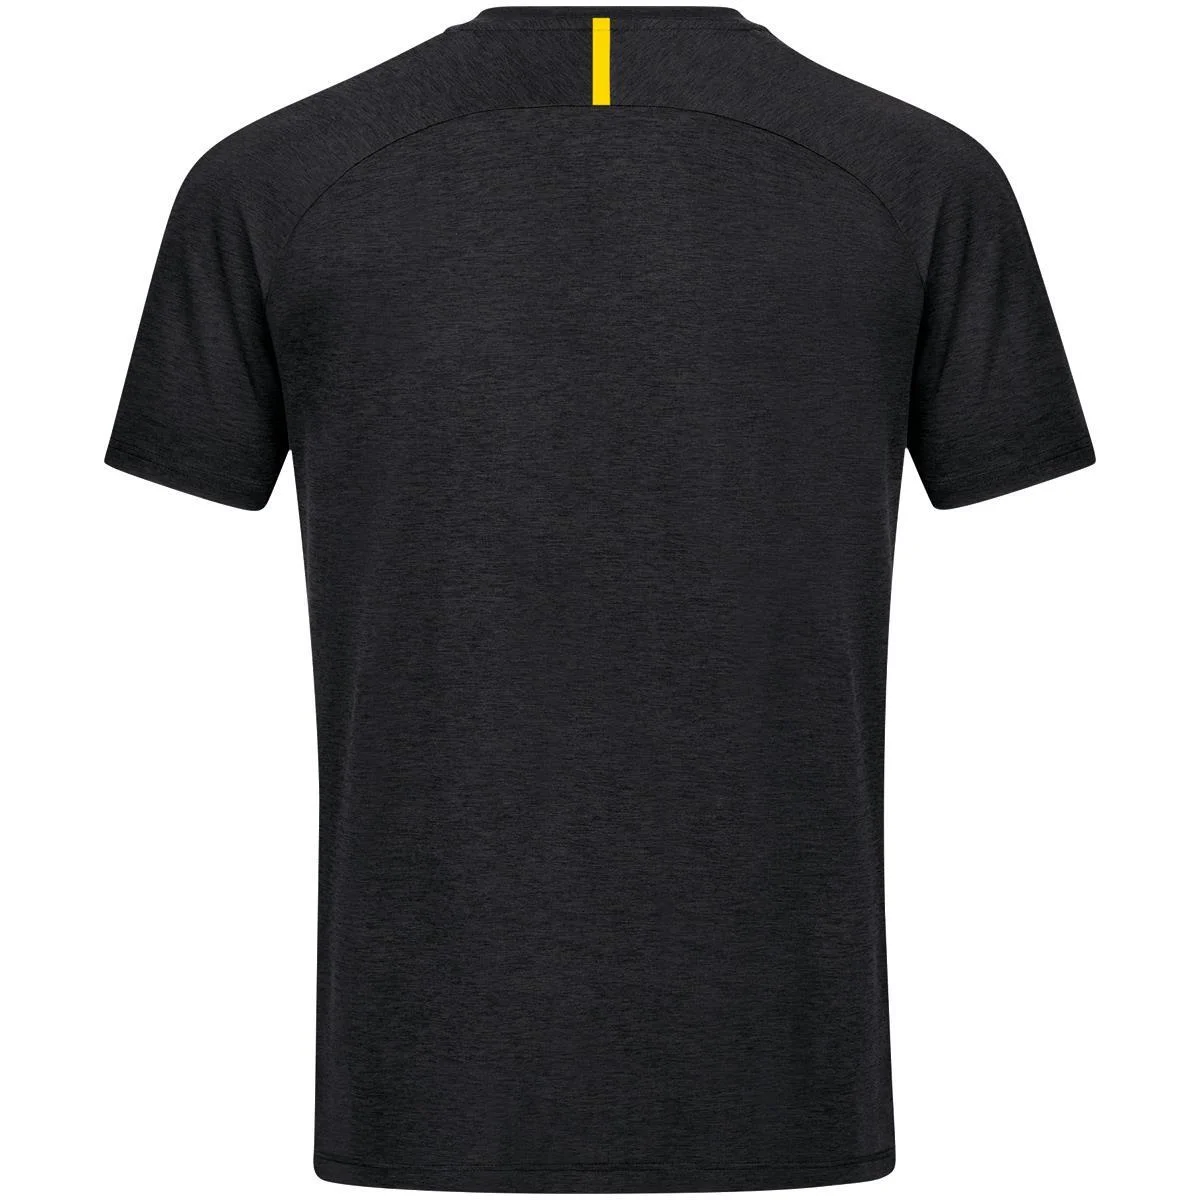 JAKO Herren T-Shirt Challenge, schwarz meliert/gelb, Gr.XXL